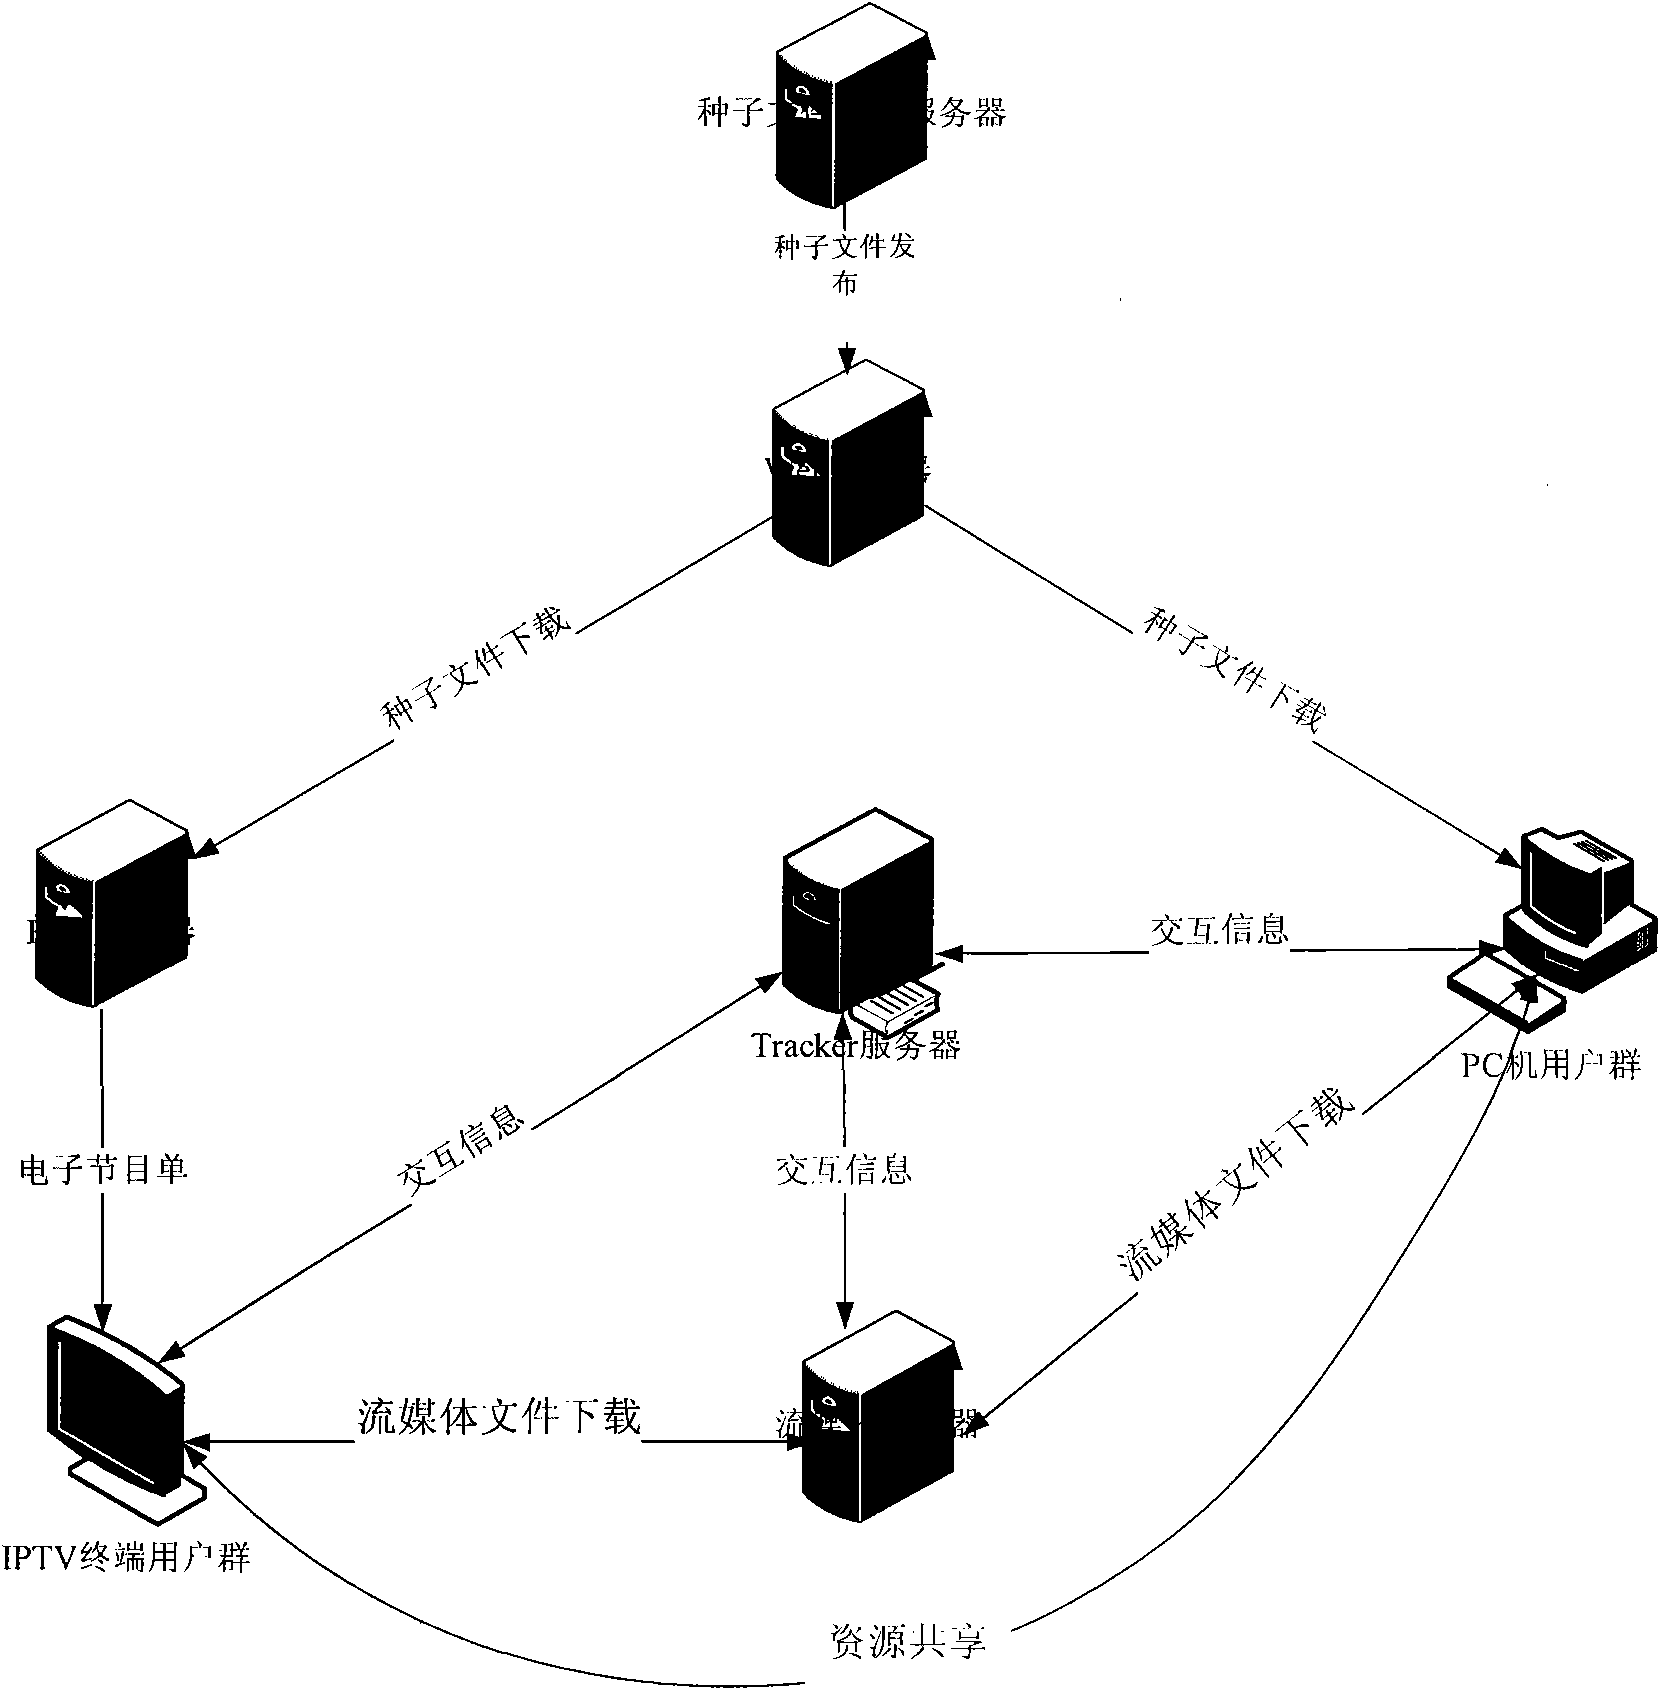 Video ordering transmission method based on peer-to-peer computing set-top box